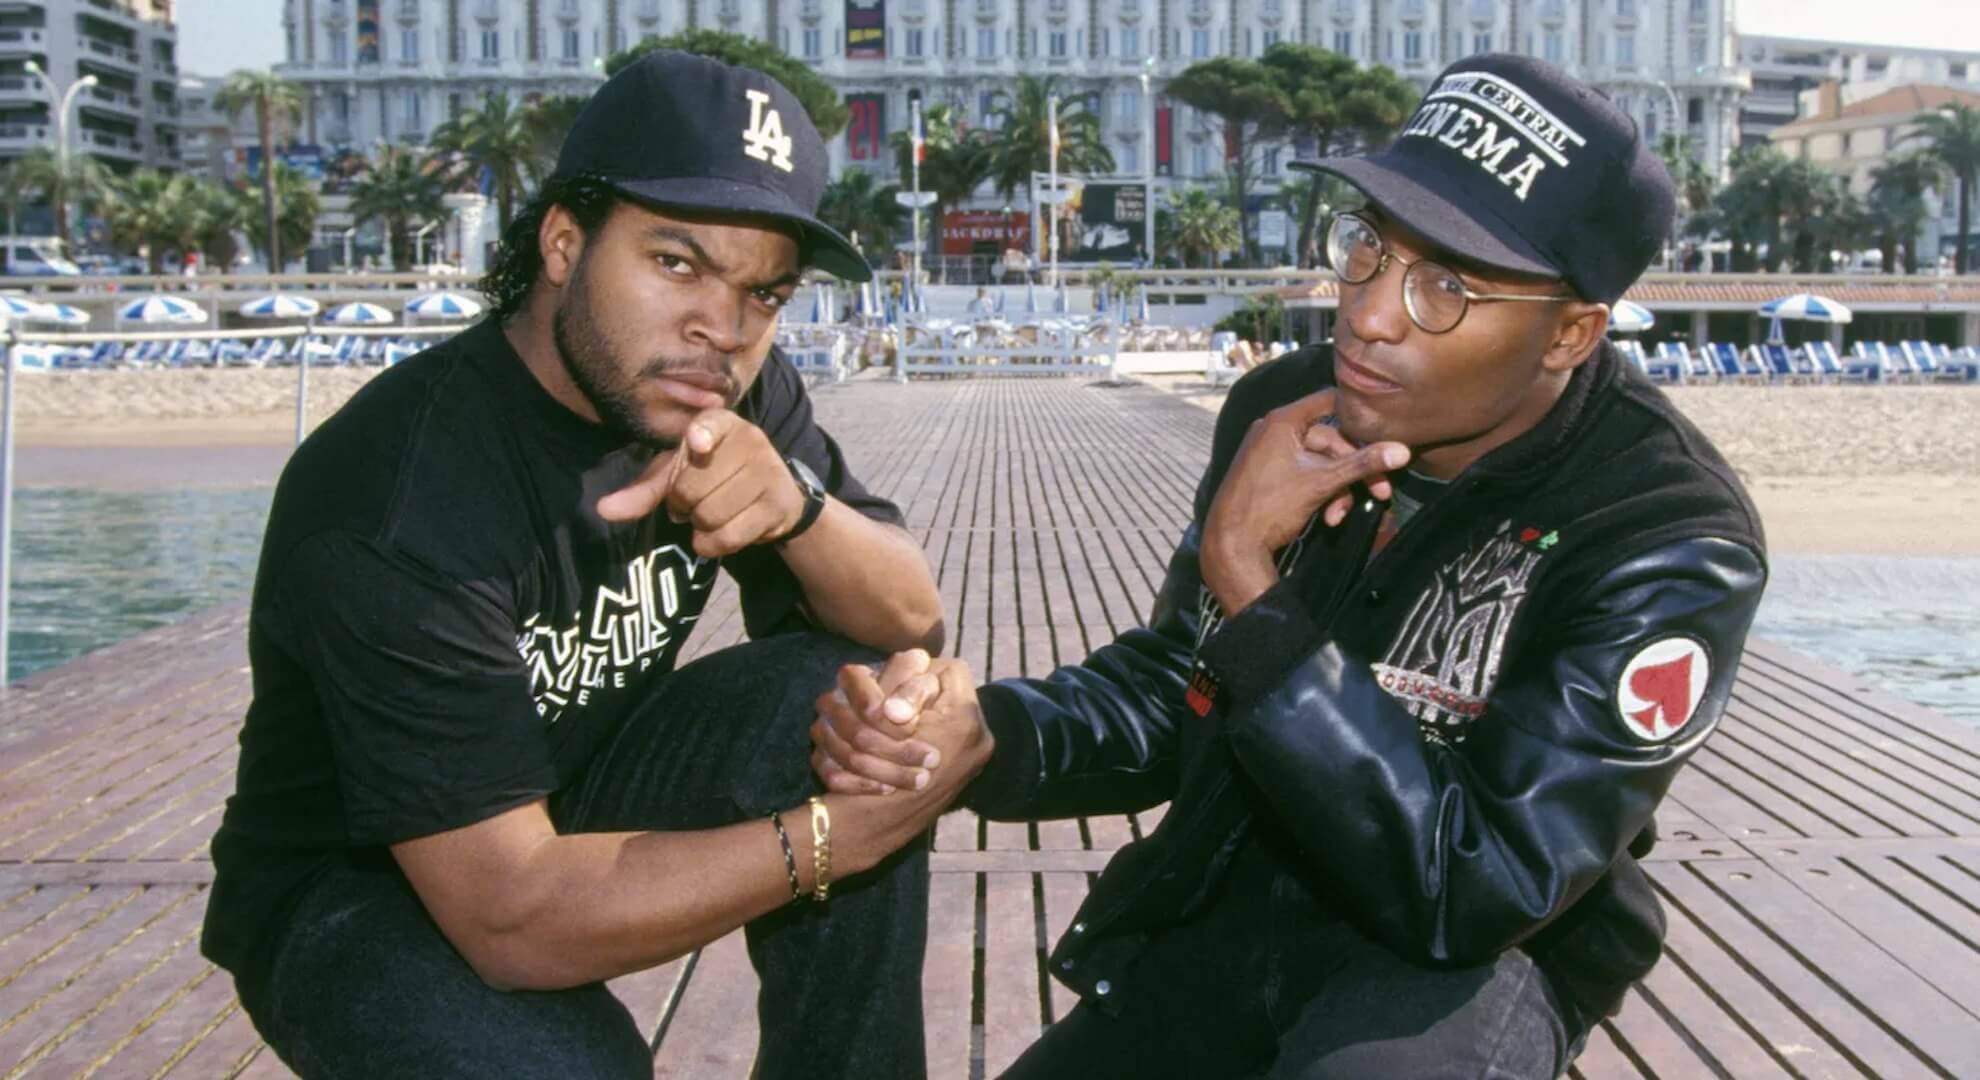 John Singleton and Ice Cube posing near the dock in Los Angeles, California